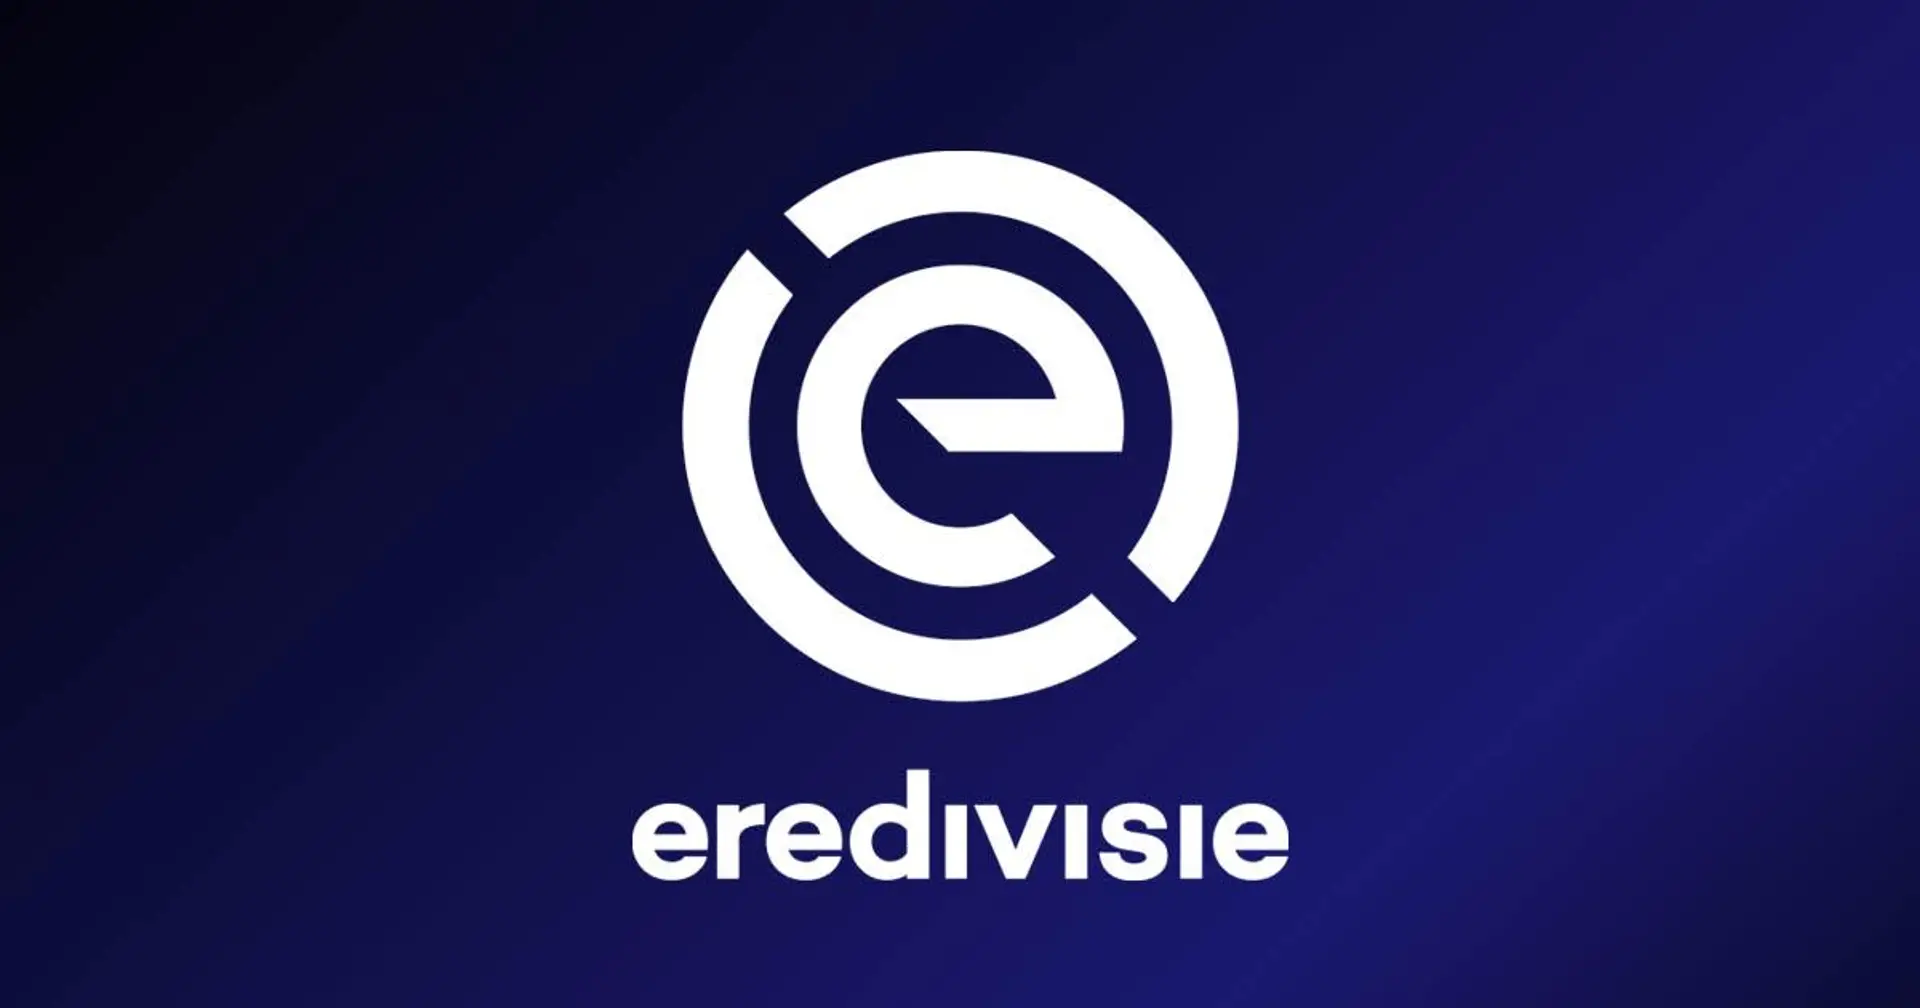 No champion, no relegation, no promotion: Eredivisie ends 2019/20 campaign